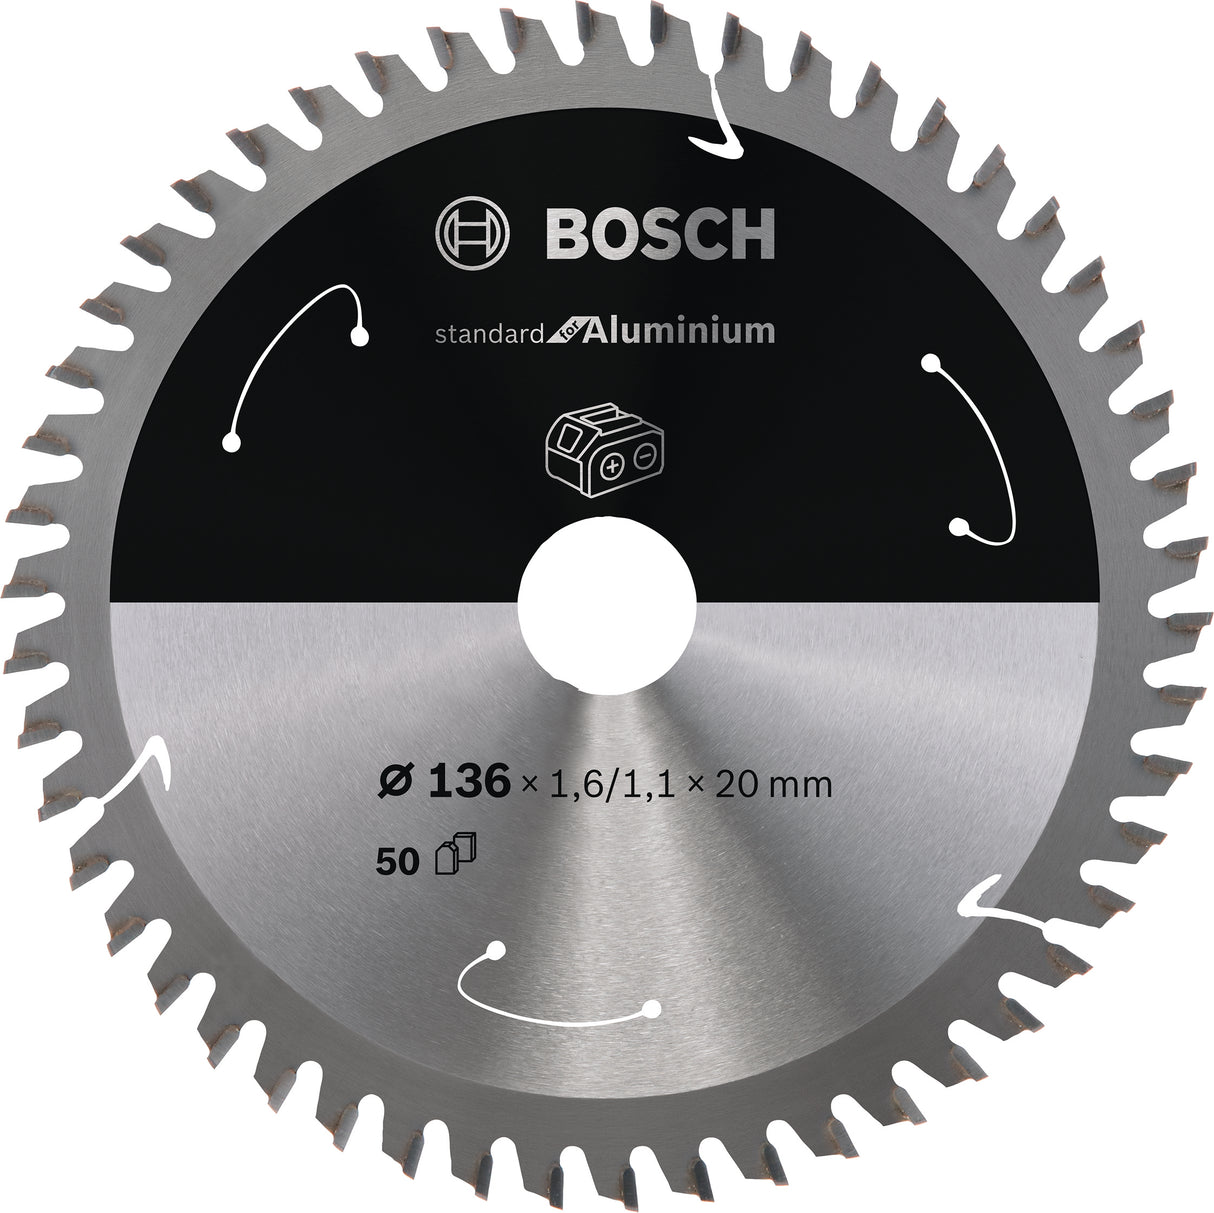 Bosch Professional Aluminium Circular Saw Blade for Cordless Saws - 136x1.6/1.1x20 T50 - Standard